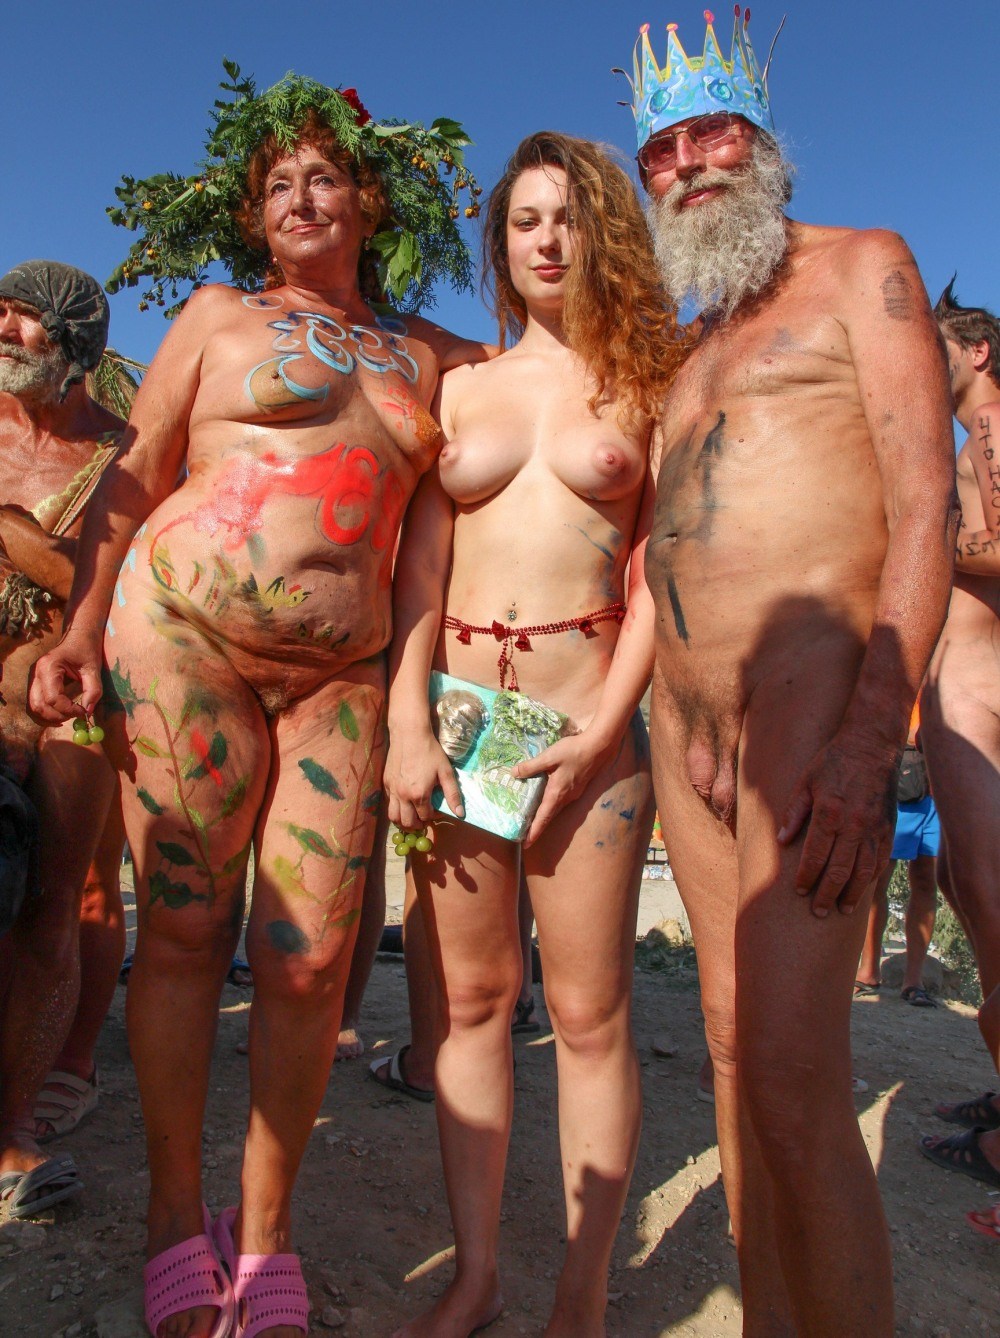 https://motherlesspics.com/1812-dragging-the-nudist-festival-97-photos.html